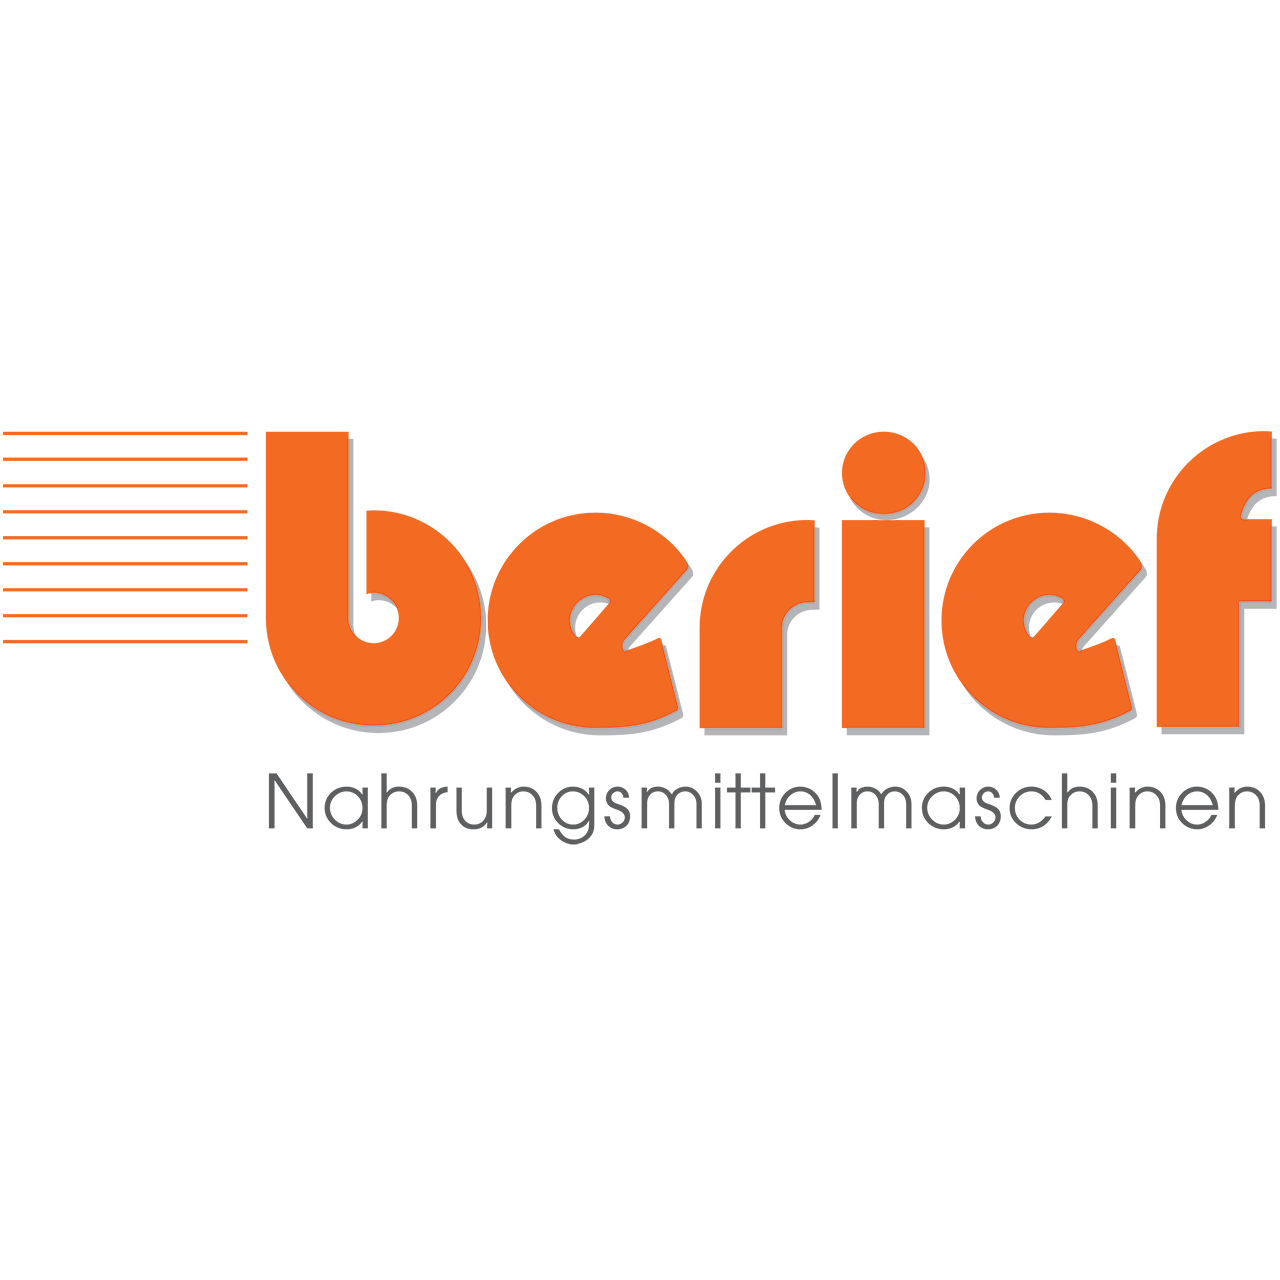 Berief Nahrungsmittelmaschinen GmbH & Co. KG  